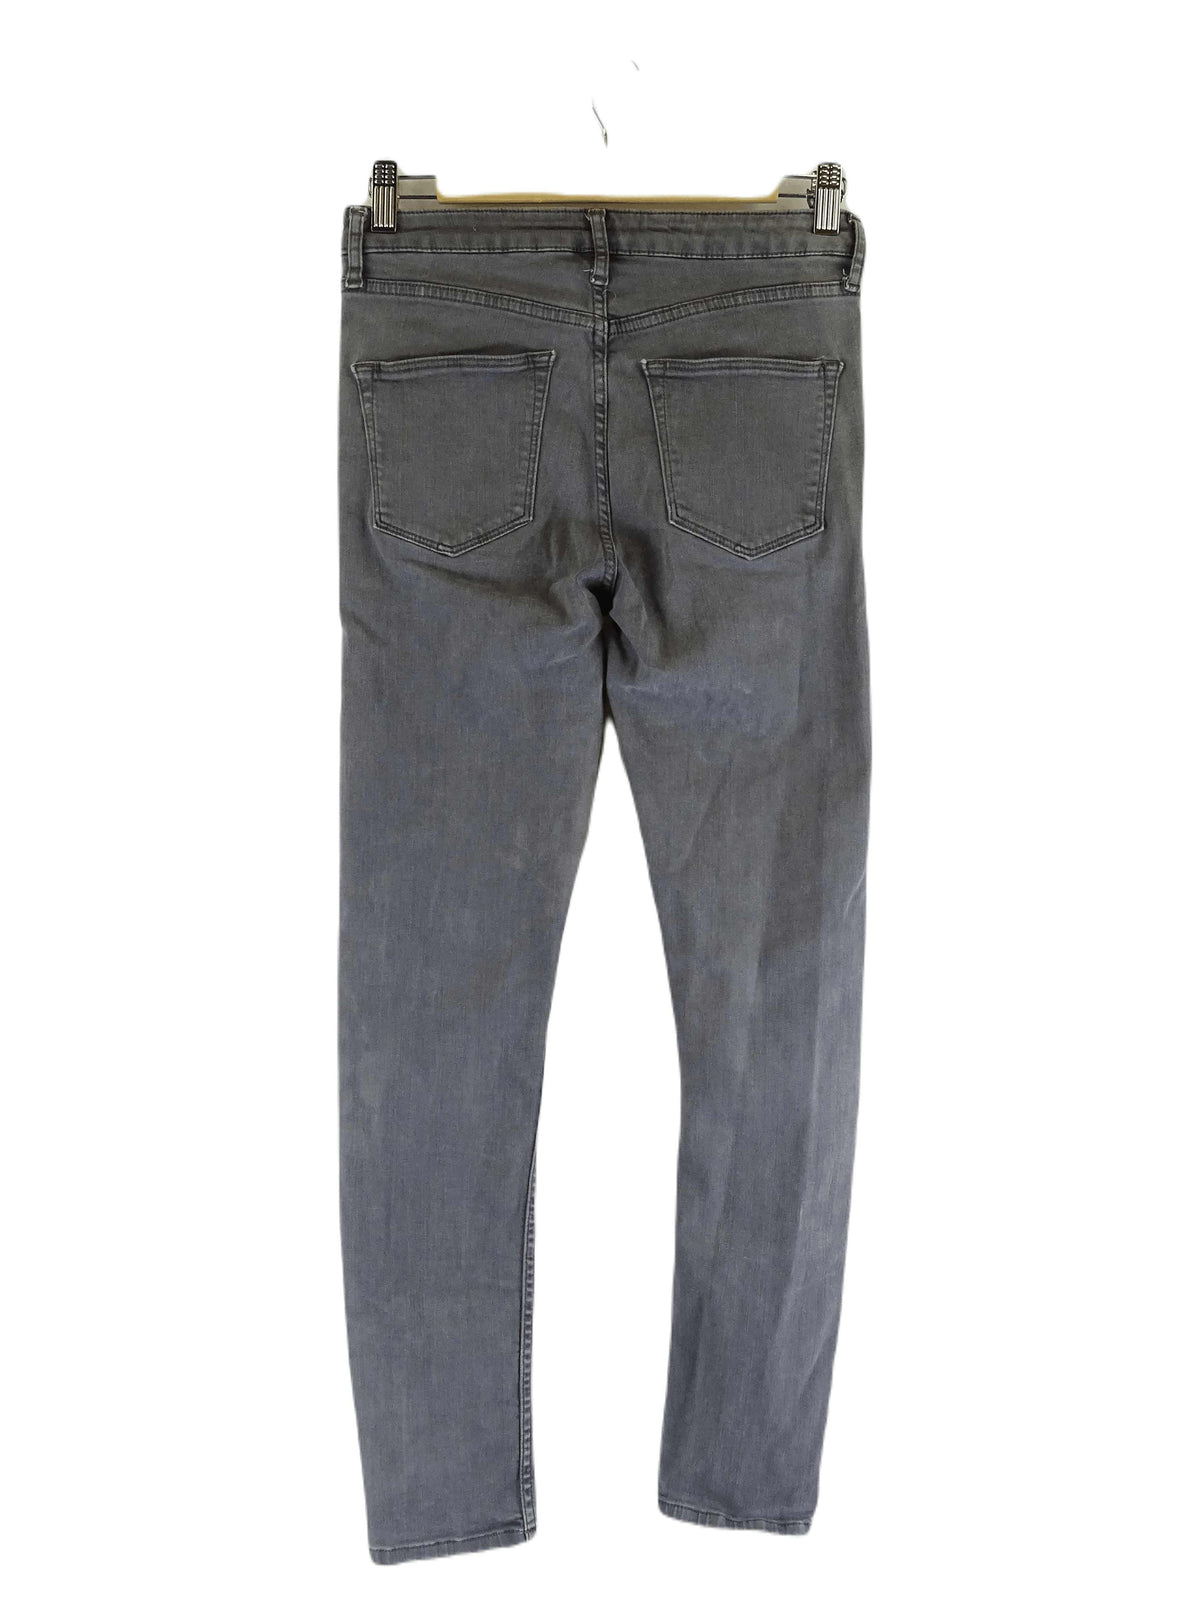 Topshop Grey Jeans 10